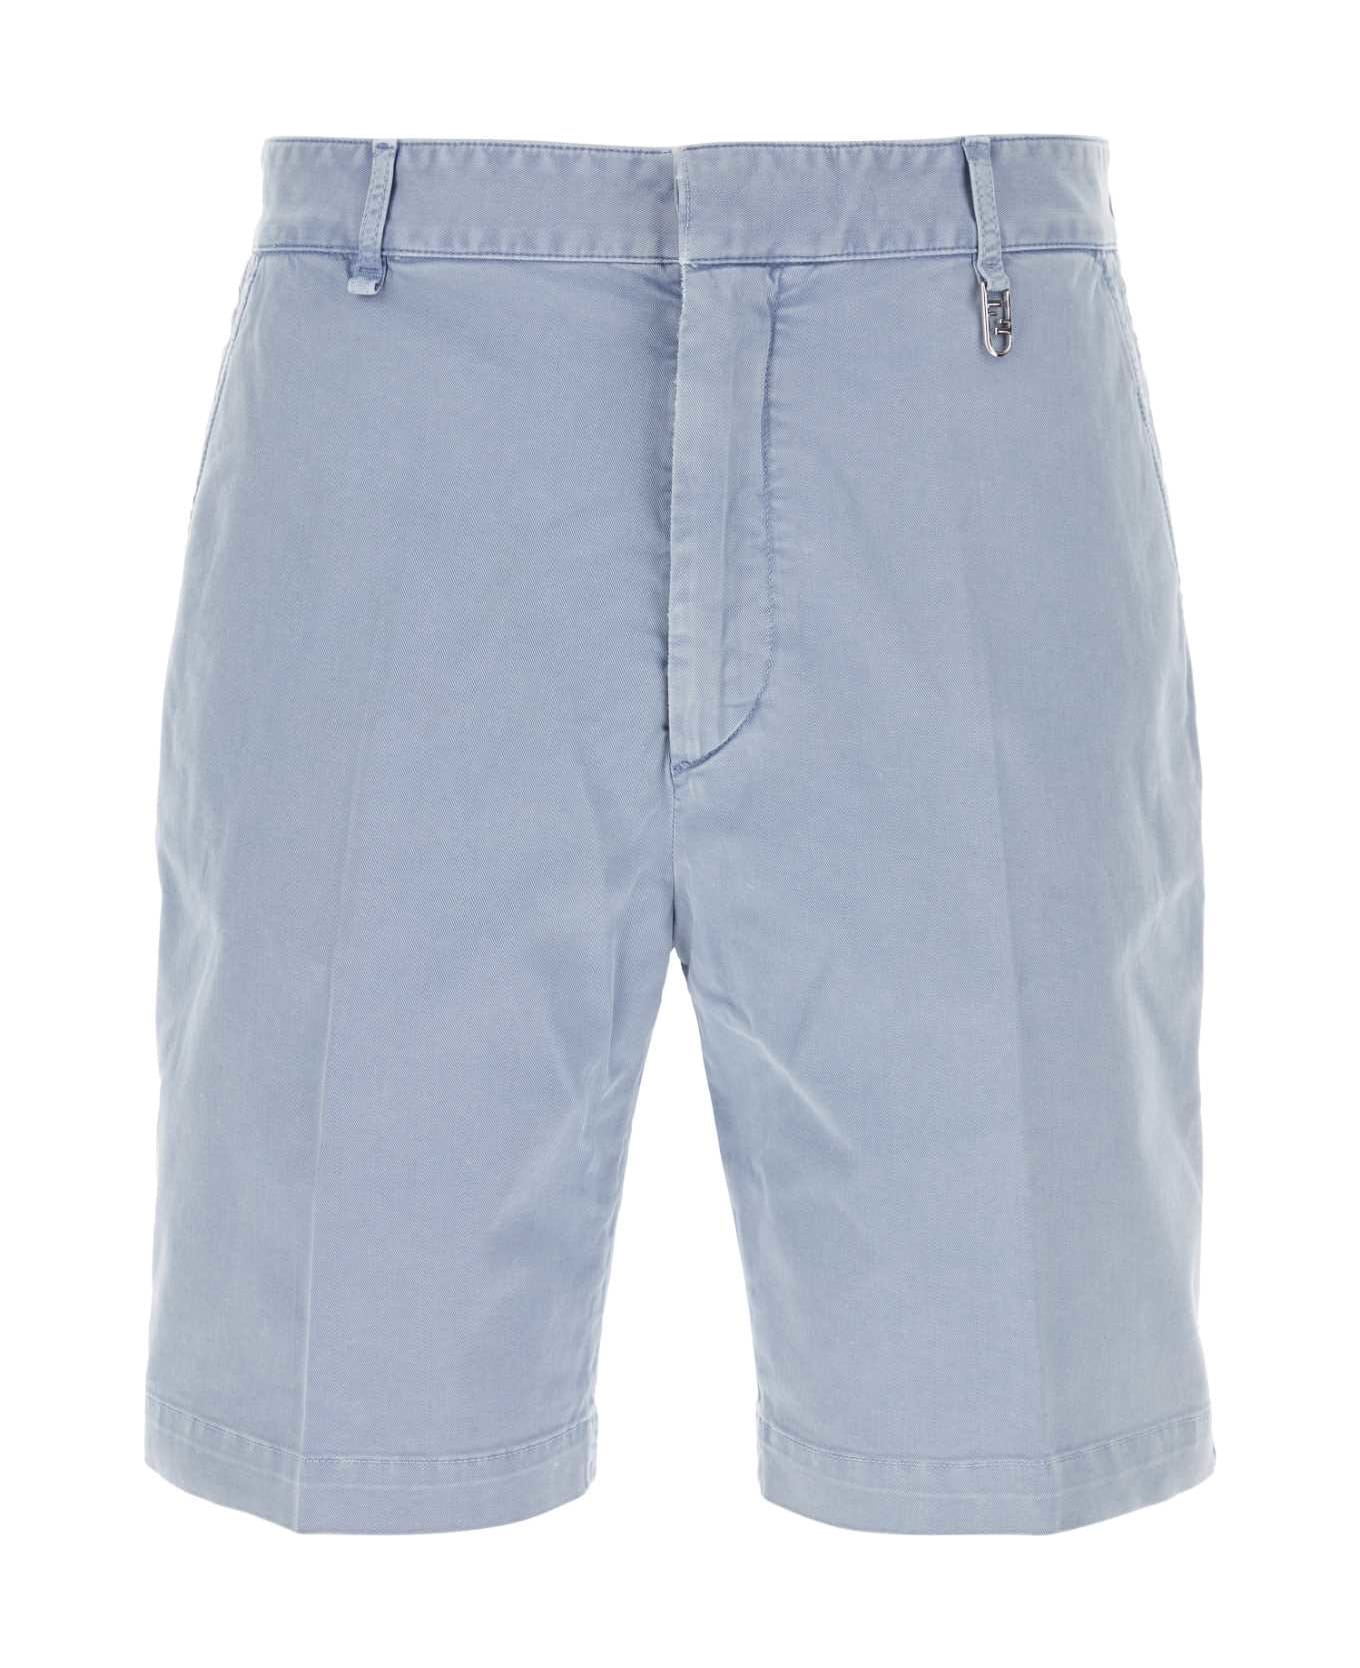 Fendi Light-blue Stretch Cotton Bermuda Shorts - OXYGENE ショートパンツ